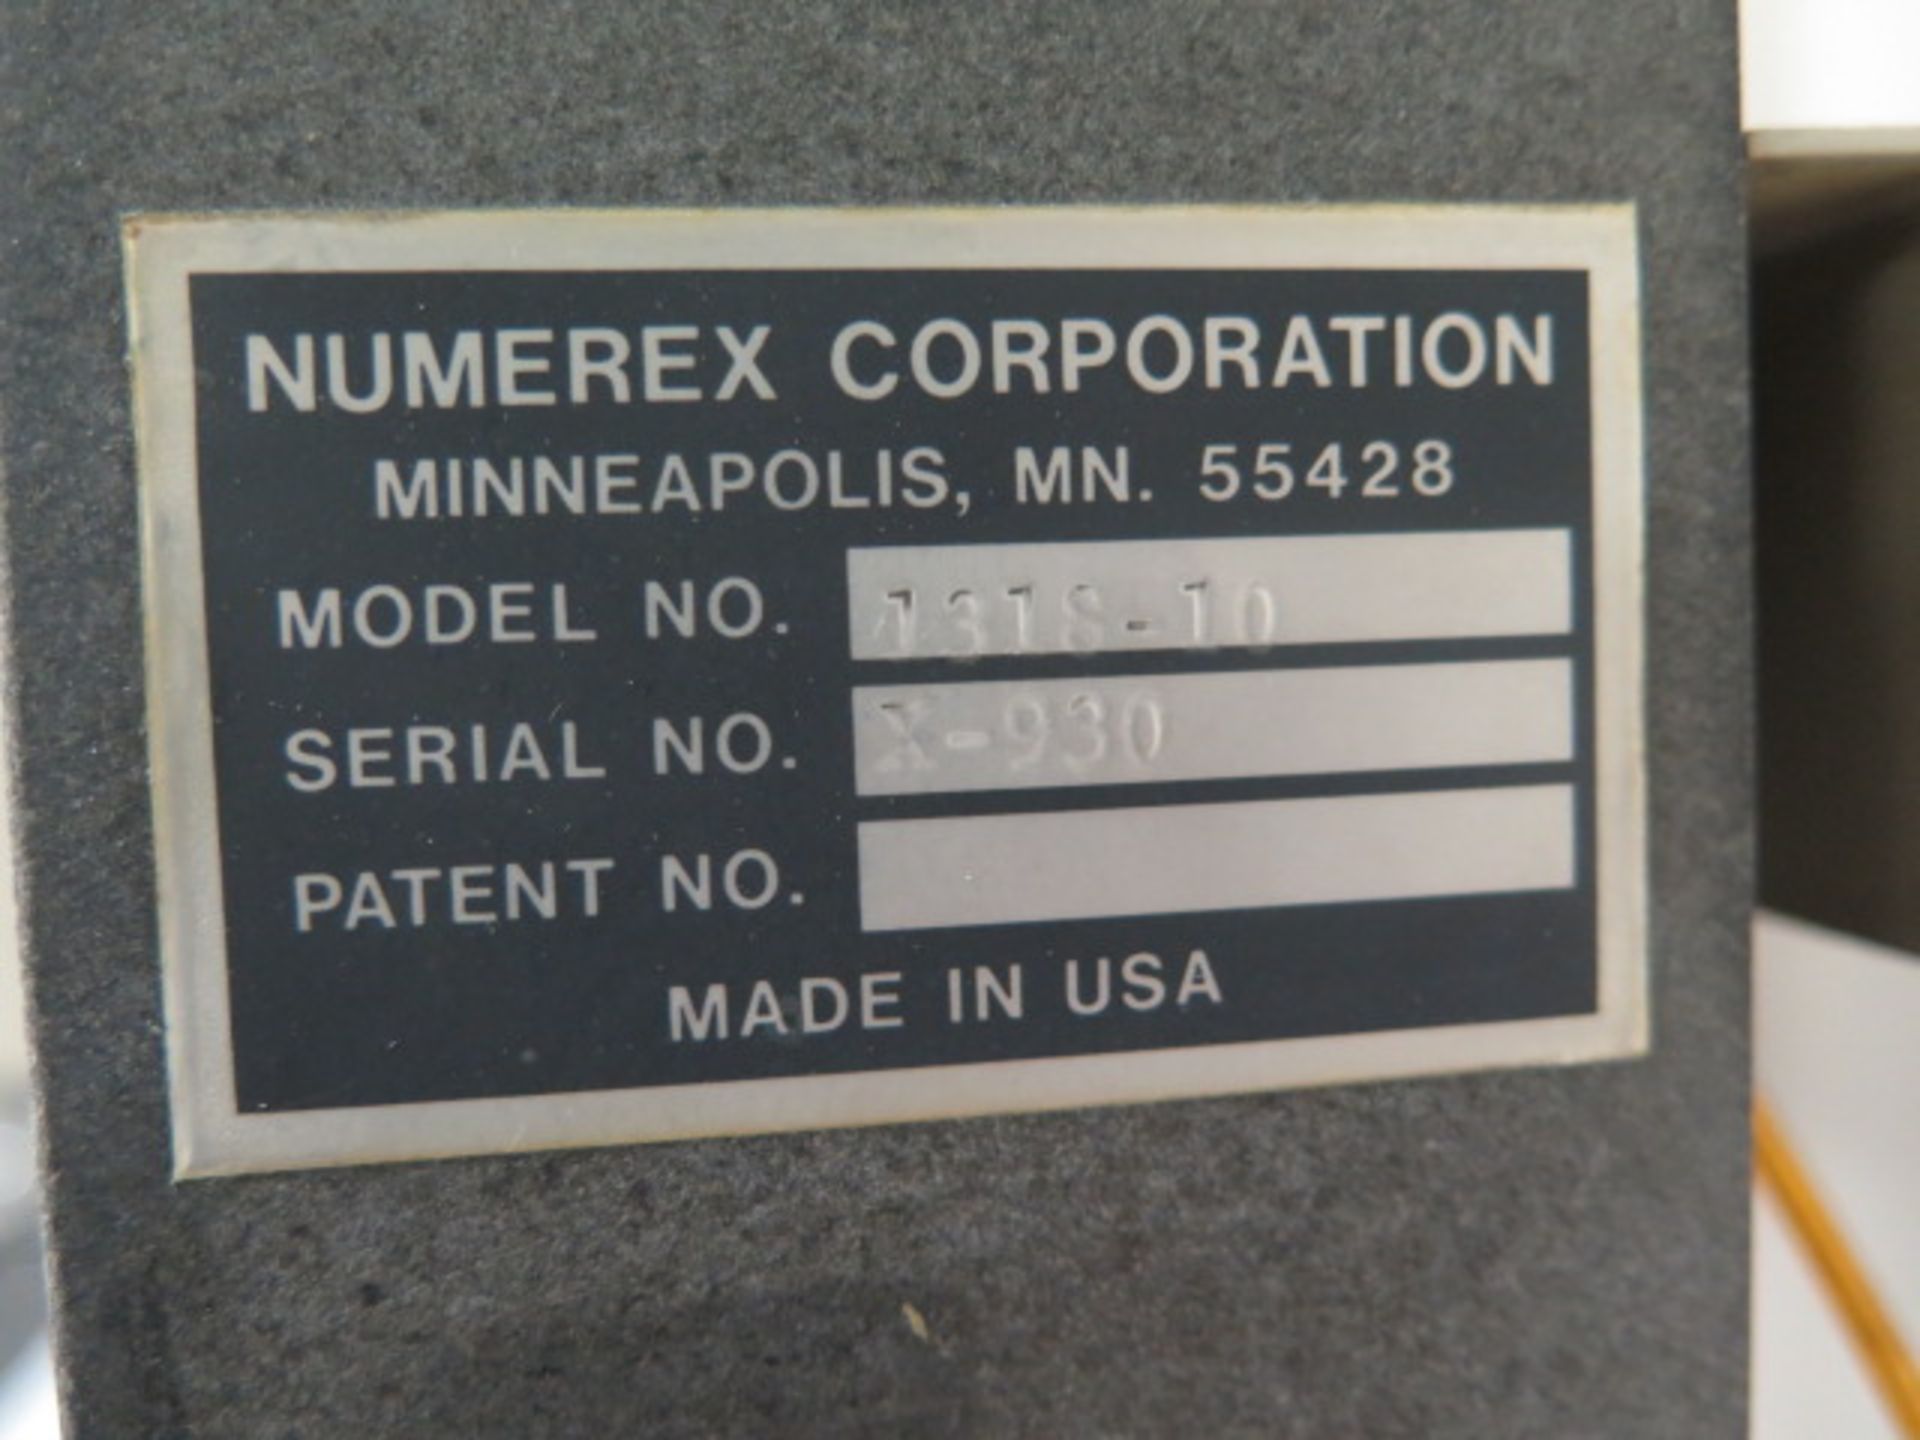 Numerex 1318-10 CMM Machine s/n X-930 w/ Renishaw MIP Probe Head, 13" x 18" x 10", SOLD AS IS - Image 14 of 14